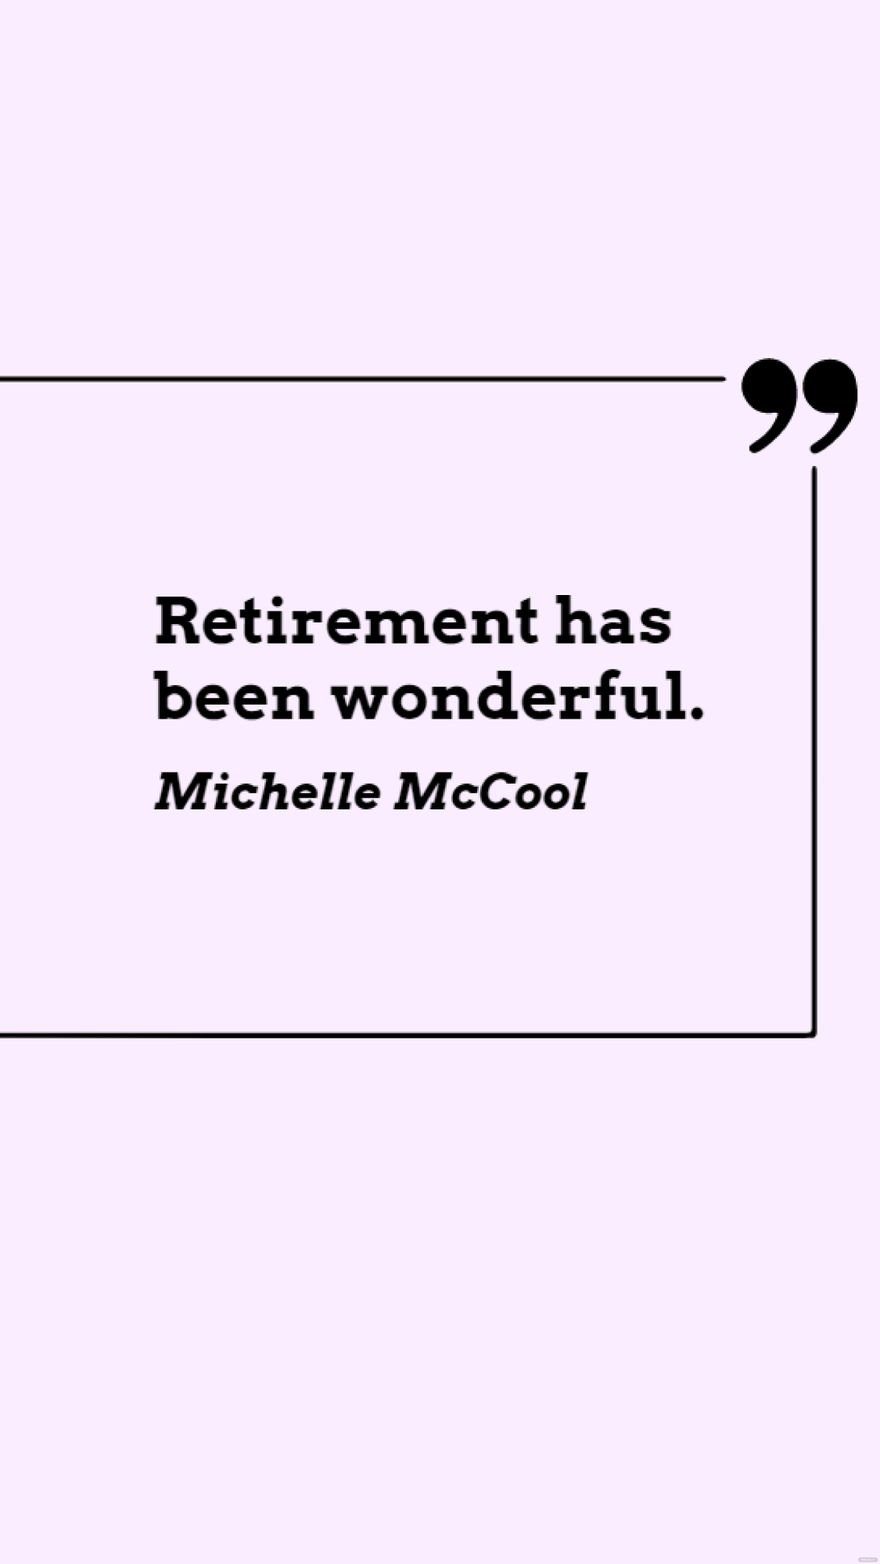 Free Michelle McCool - Retirement has been wonderful. in JPG